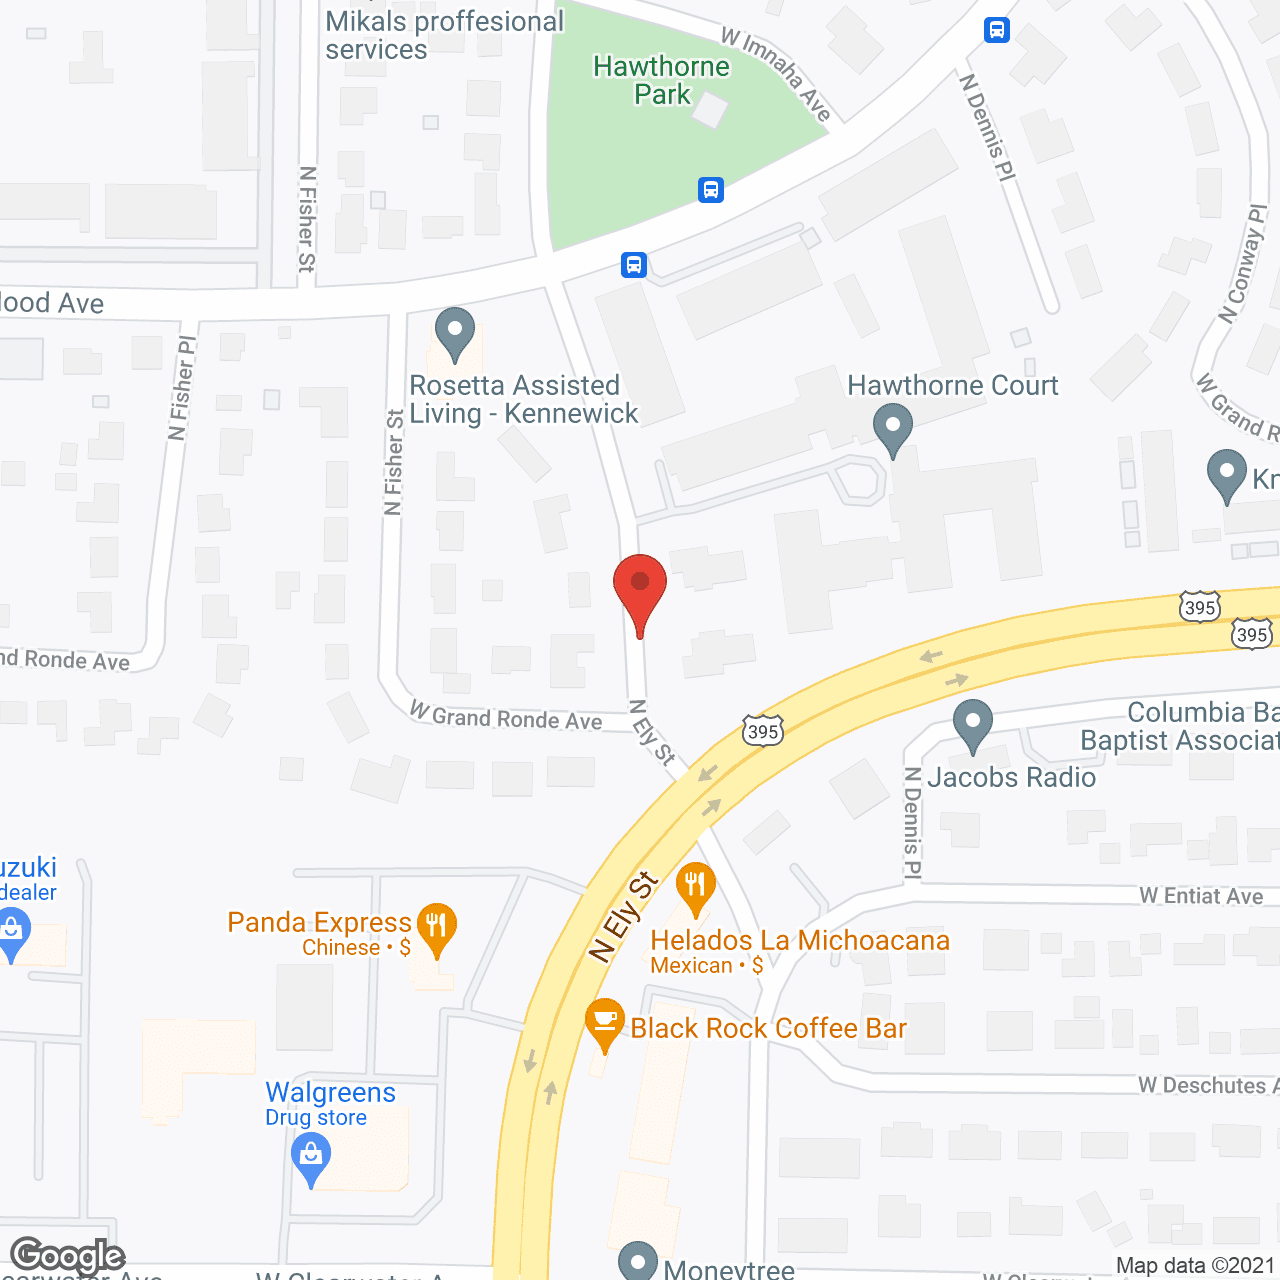 Hawthorne Court in google map